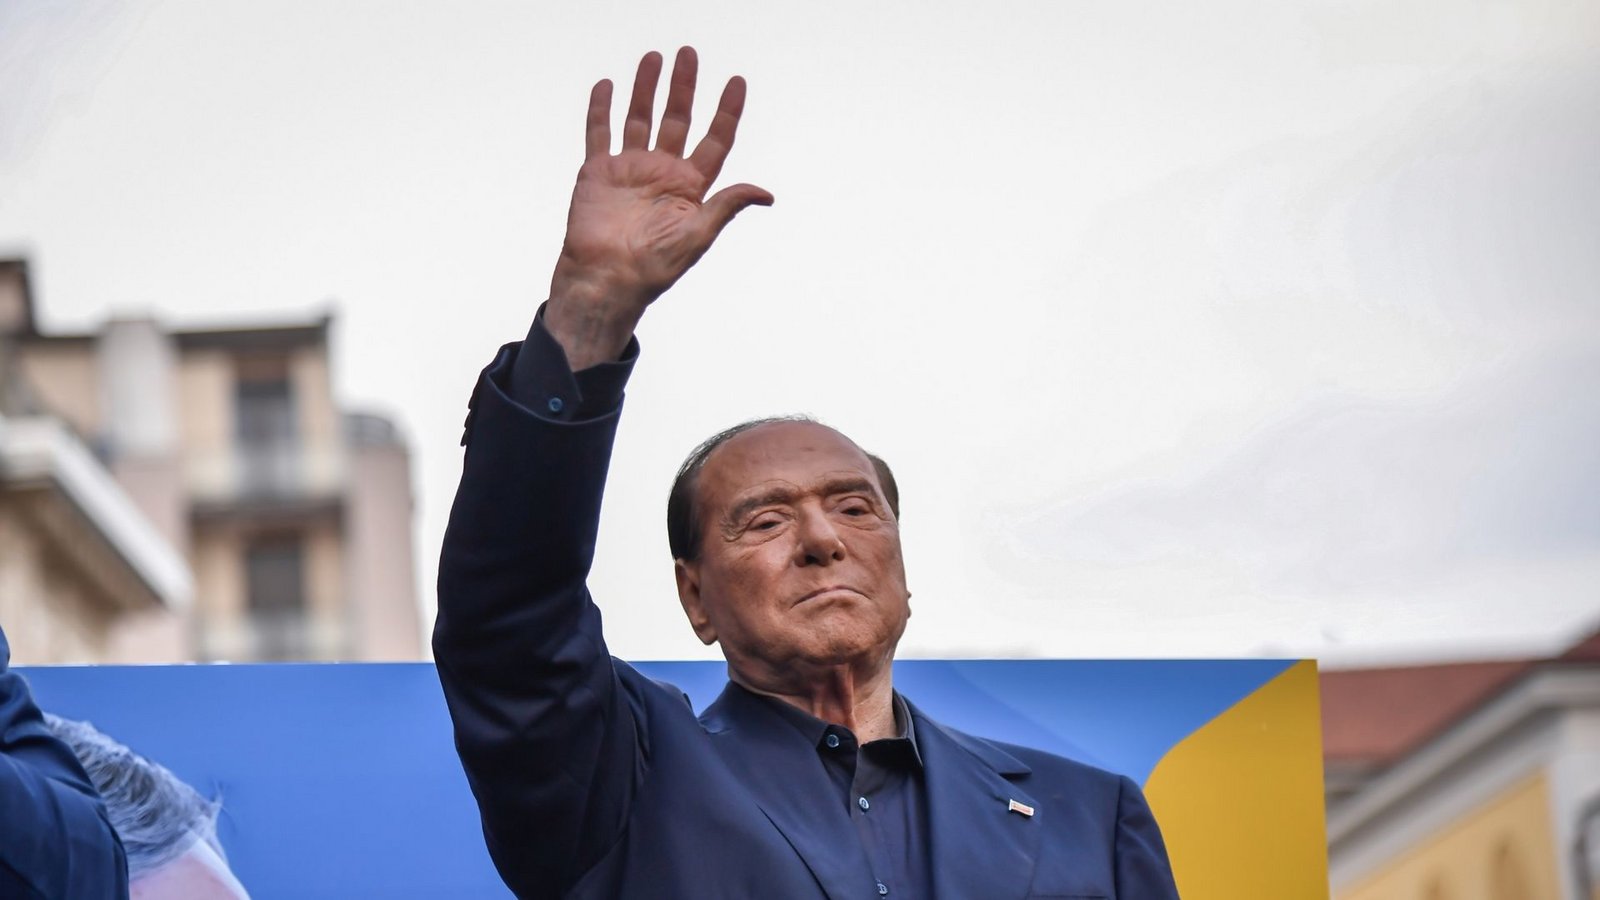 Viele Jahre Abgeordneter im italienischen Parlament: Silvio Berlusconi.Foto: Claudio Furlan/LaPresse/ZUMA/dpa